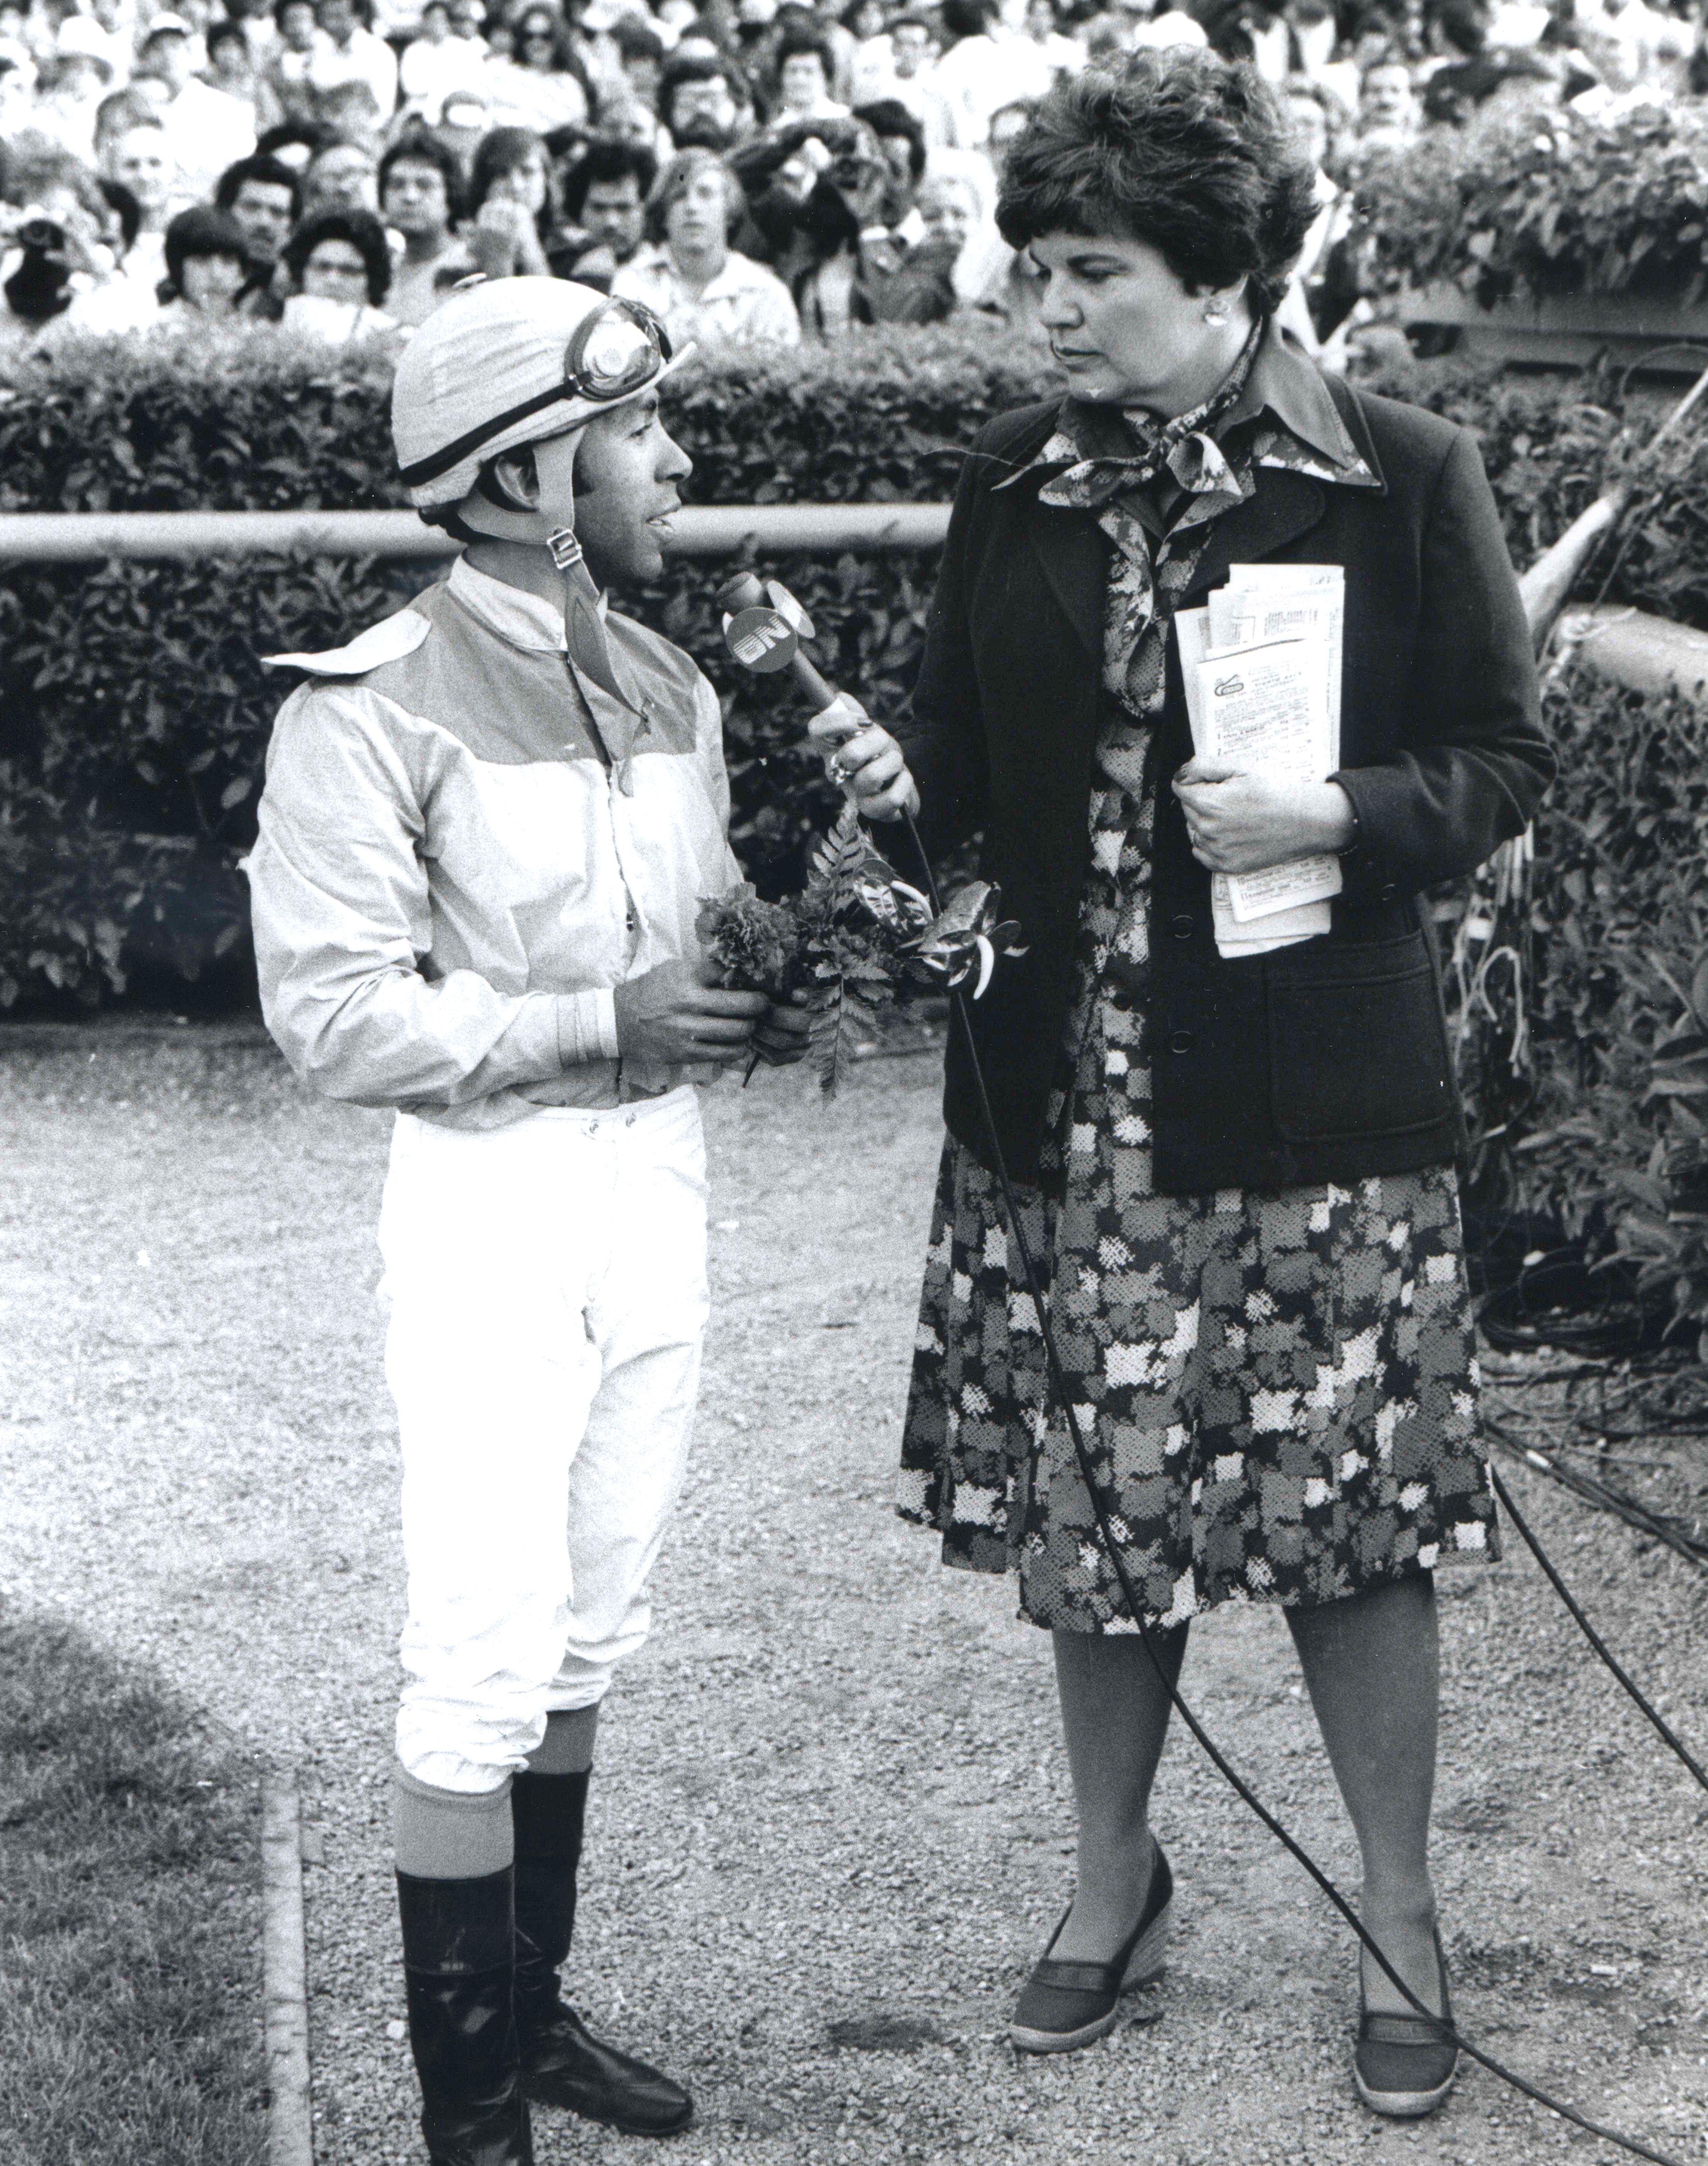 Angel Cordero, Jr. being interviewed, Santa Anita Park, February 1979 (Bill Mochon/Museum Collection)